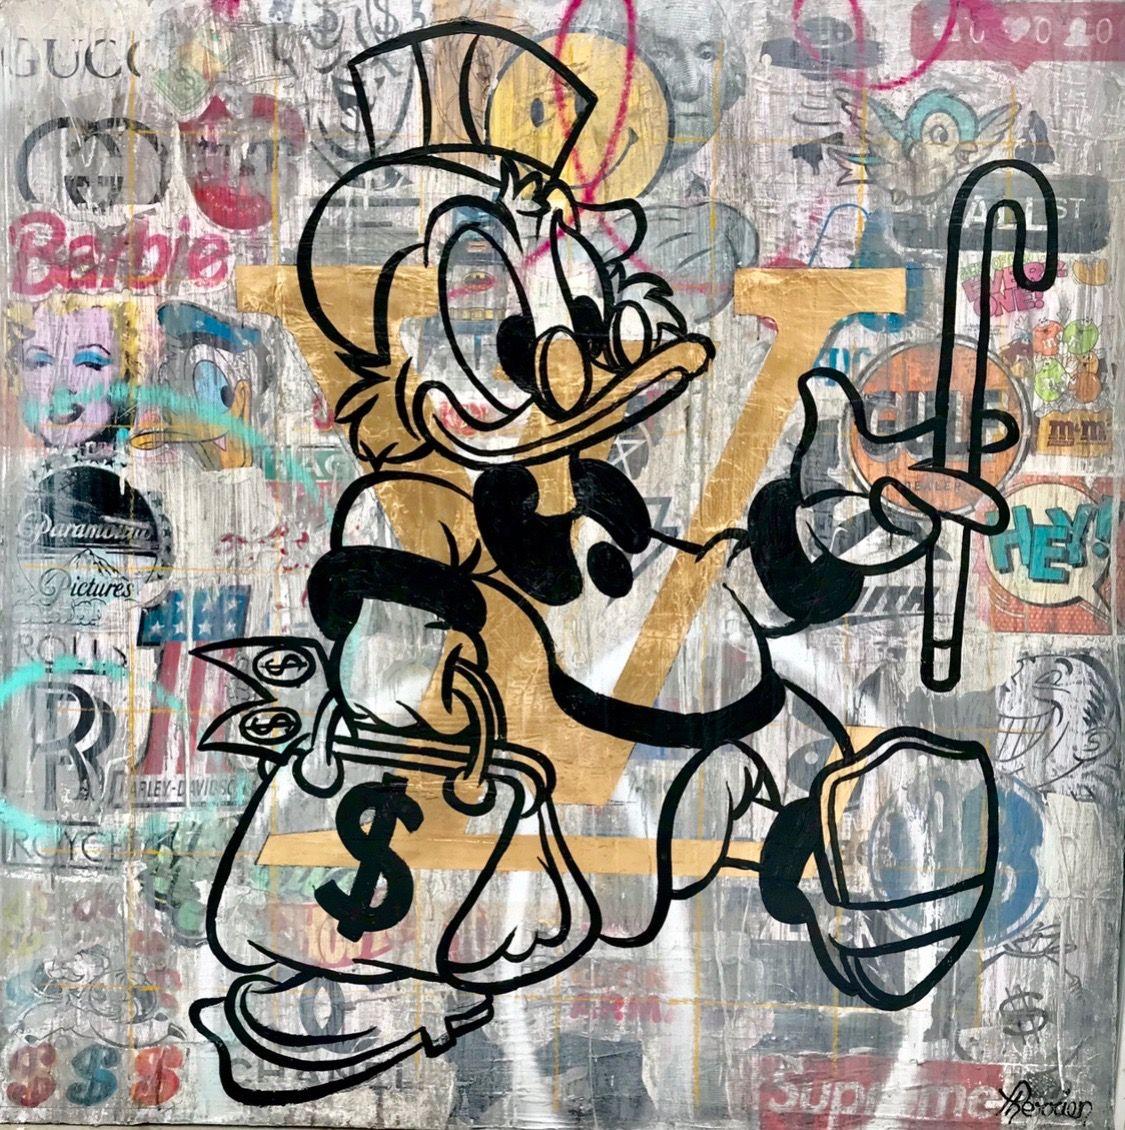 Money Maker - Mixed Media Art by Rock Therrien